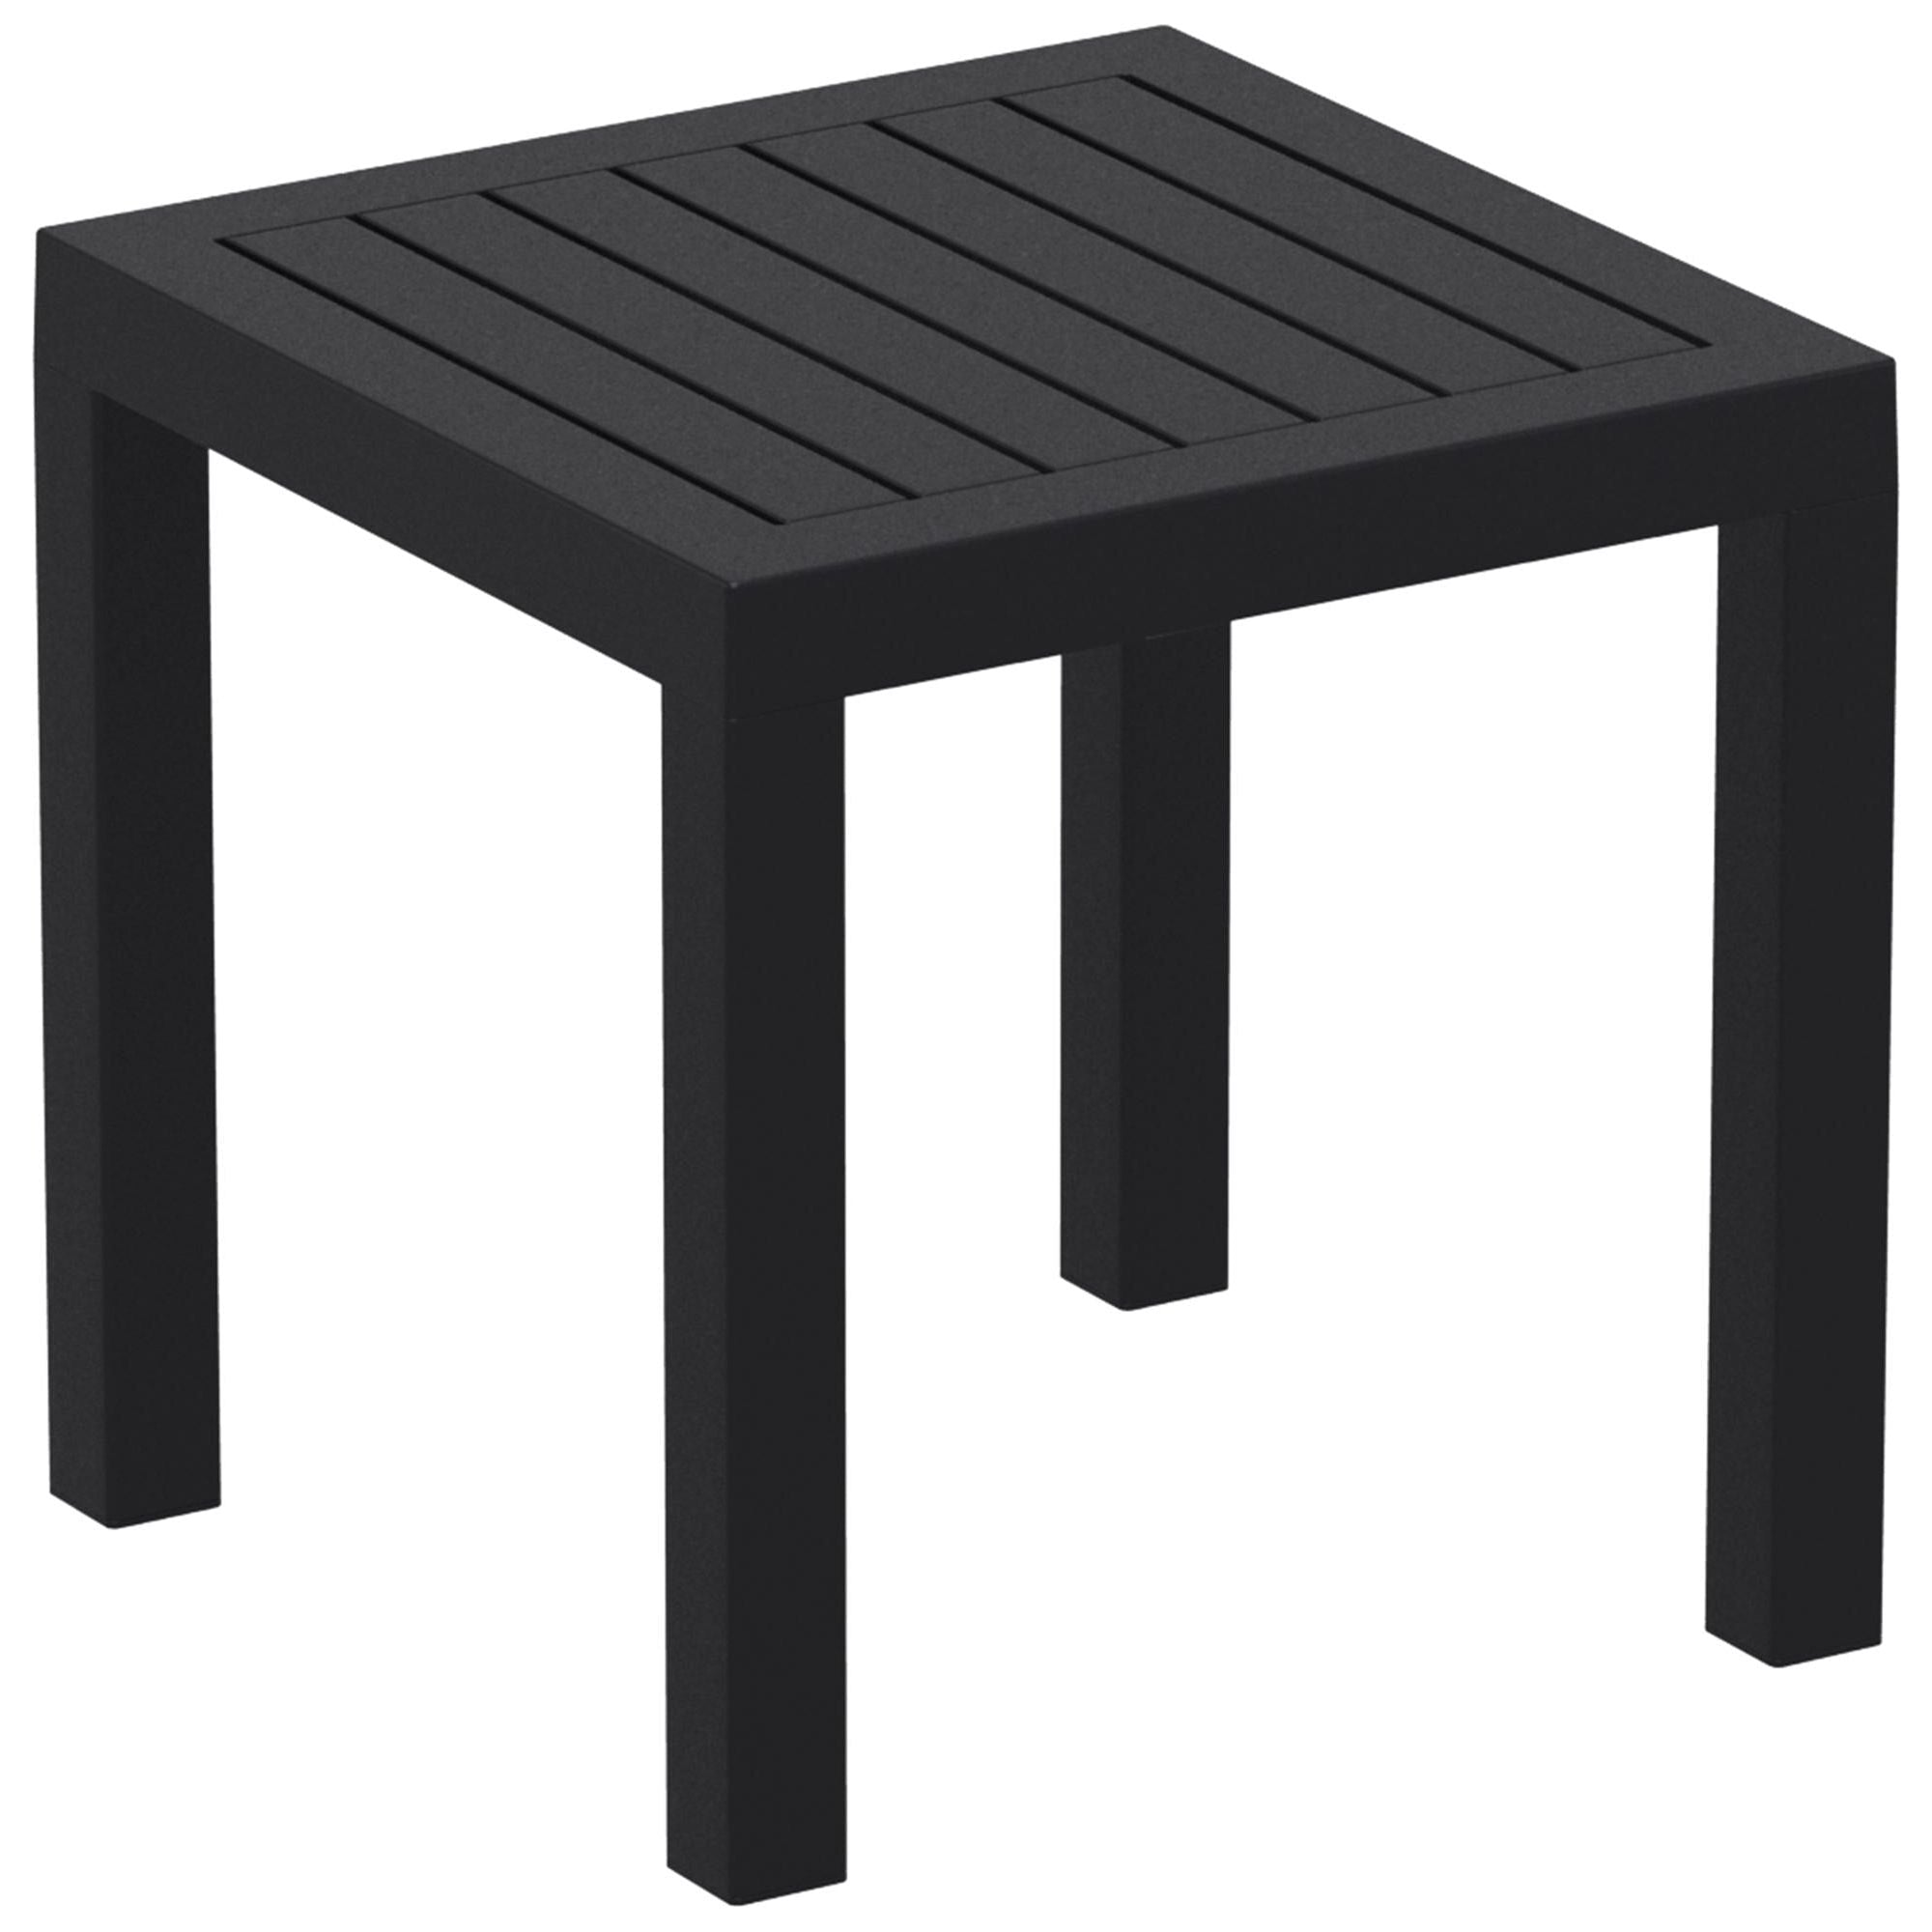 Garbar ocean side table outdoor 45x45 black